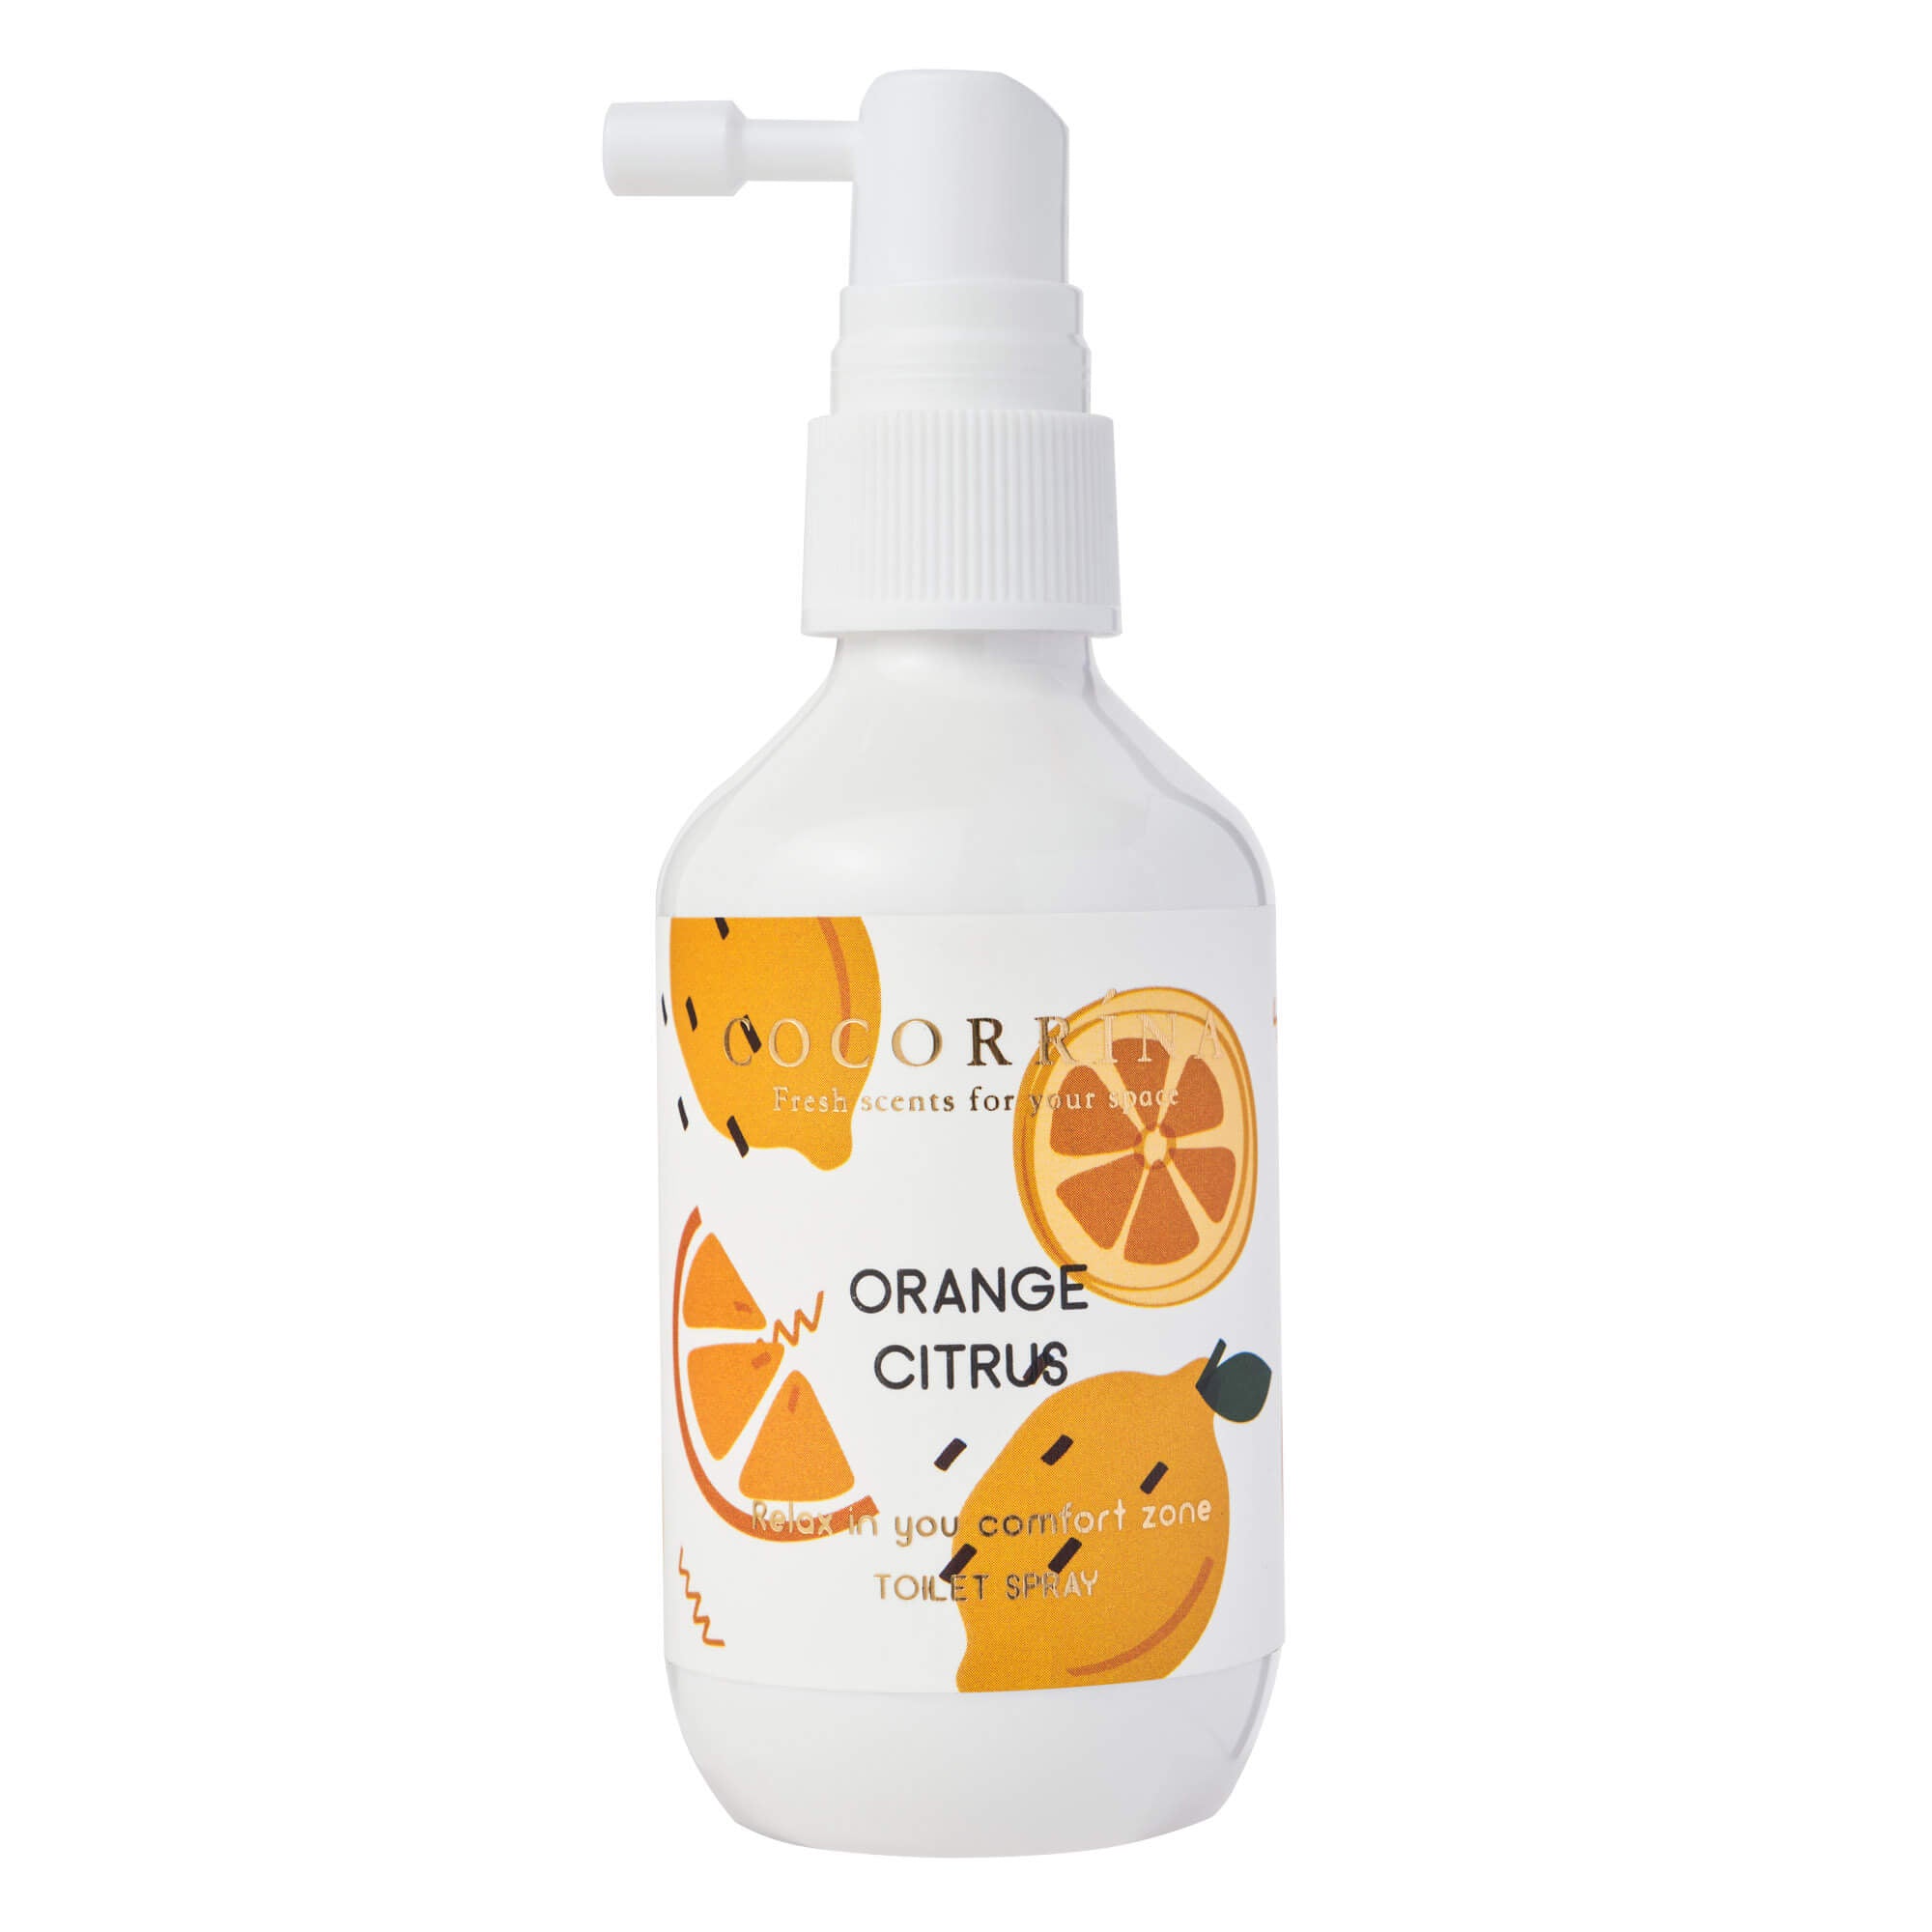 COCORRÍNA Orange Citrus Toilet Spray